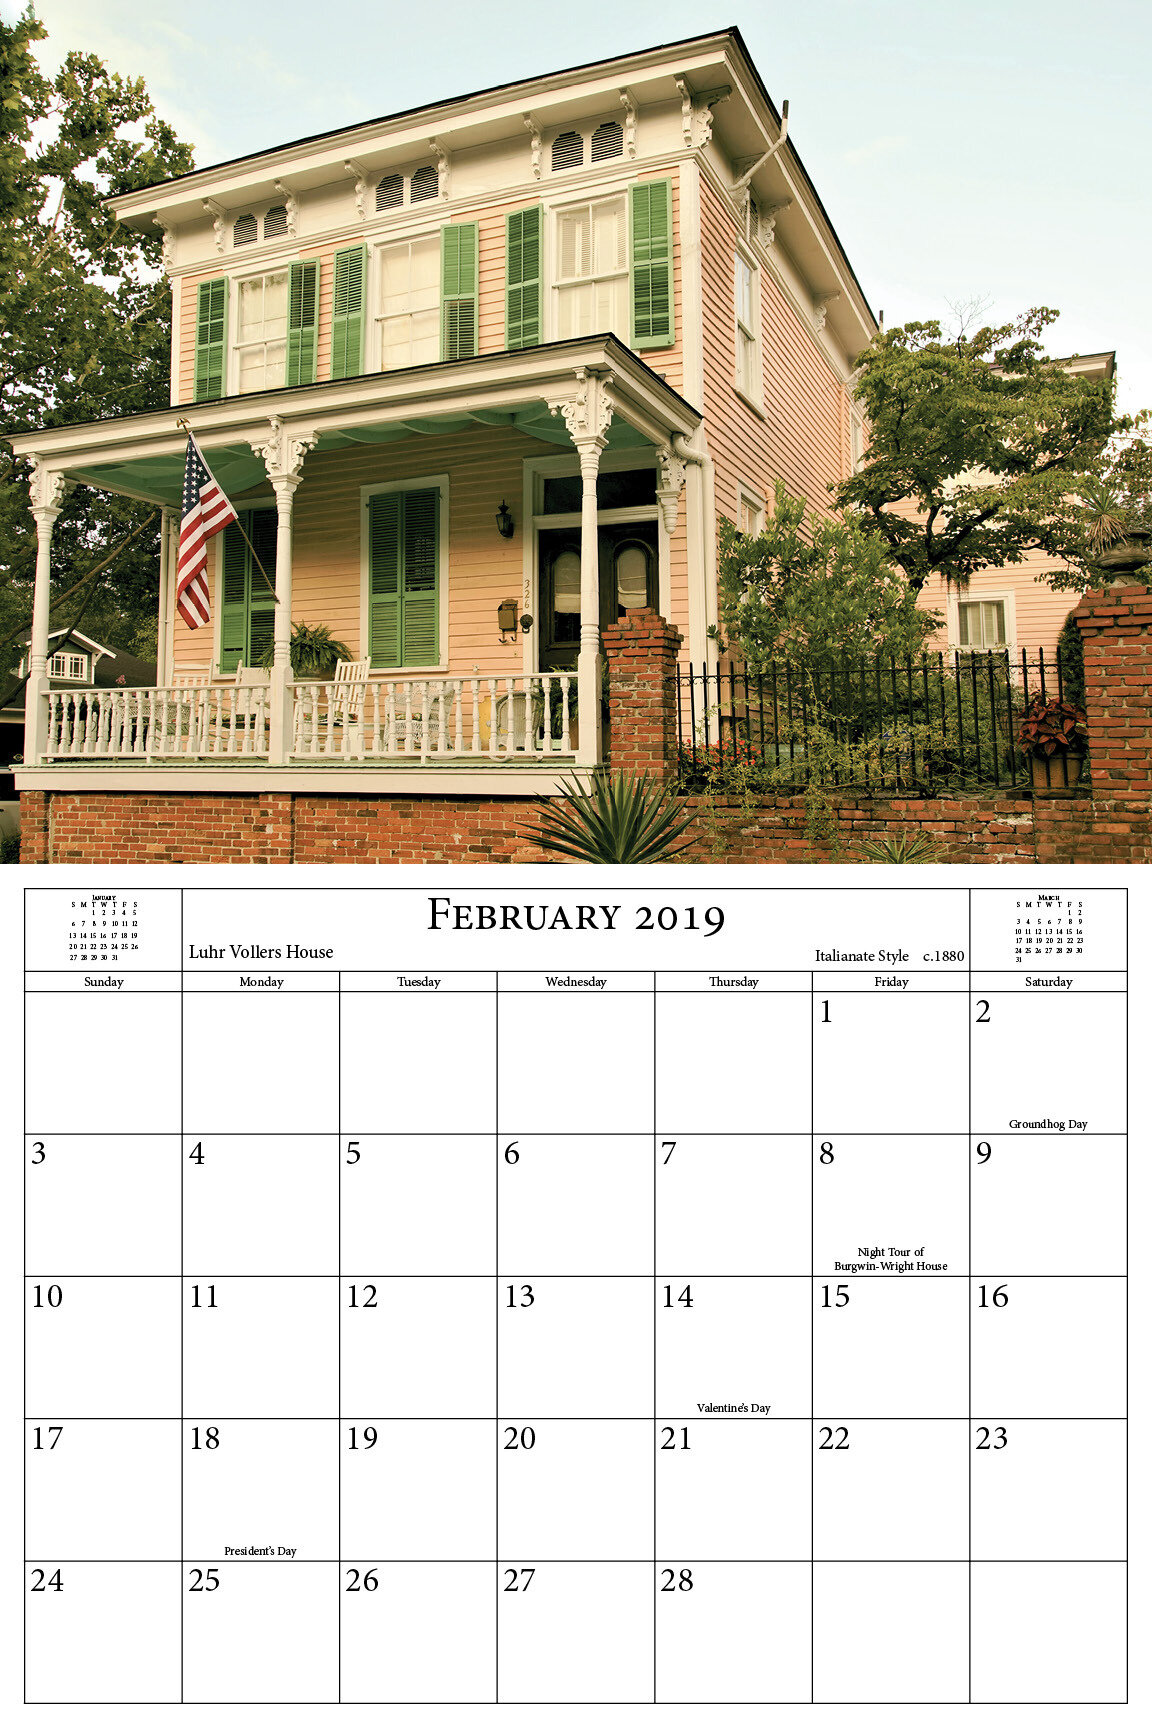 Wilmington Calendar 2019 Desgin by Cybergraph Photos by Michael Smith3.jpg